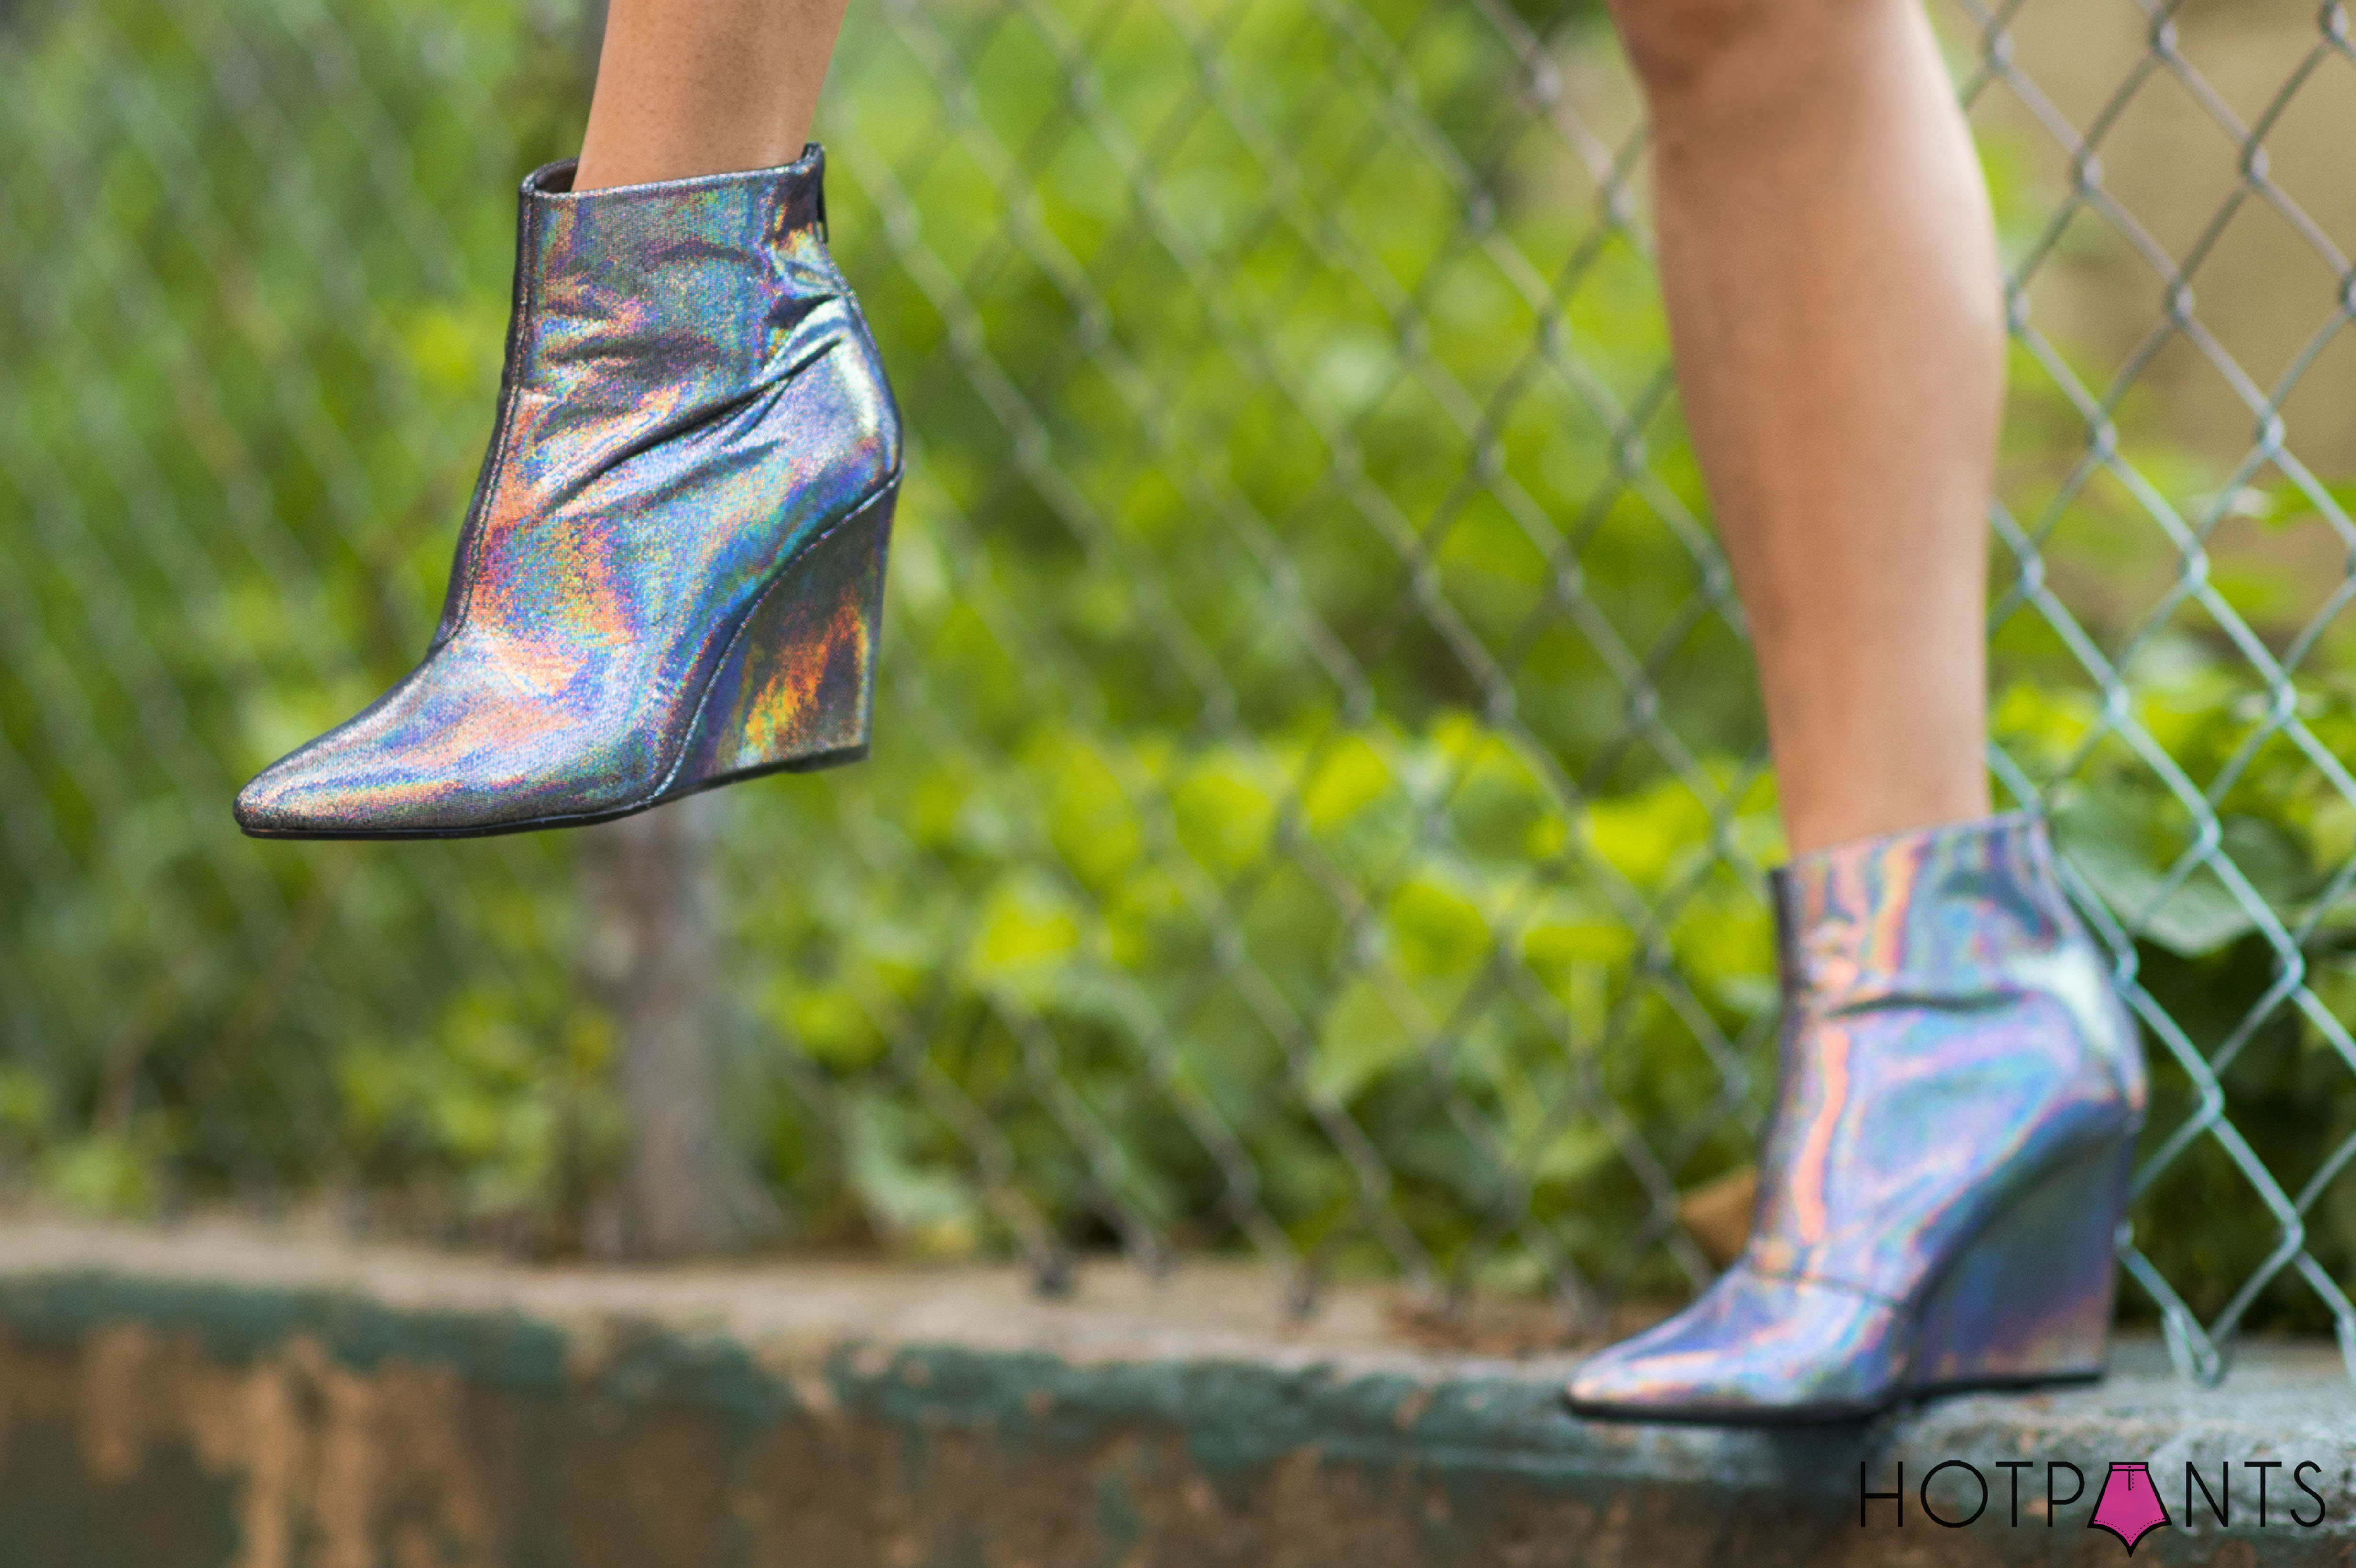 American Apparel Shorts Rainbow Heels Legs Bright Lipstick Streetstyle NYC